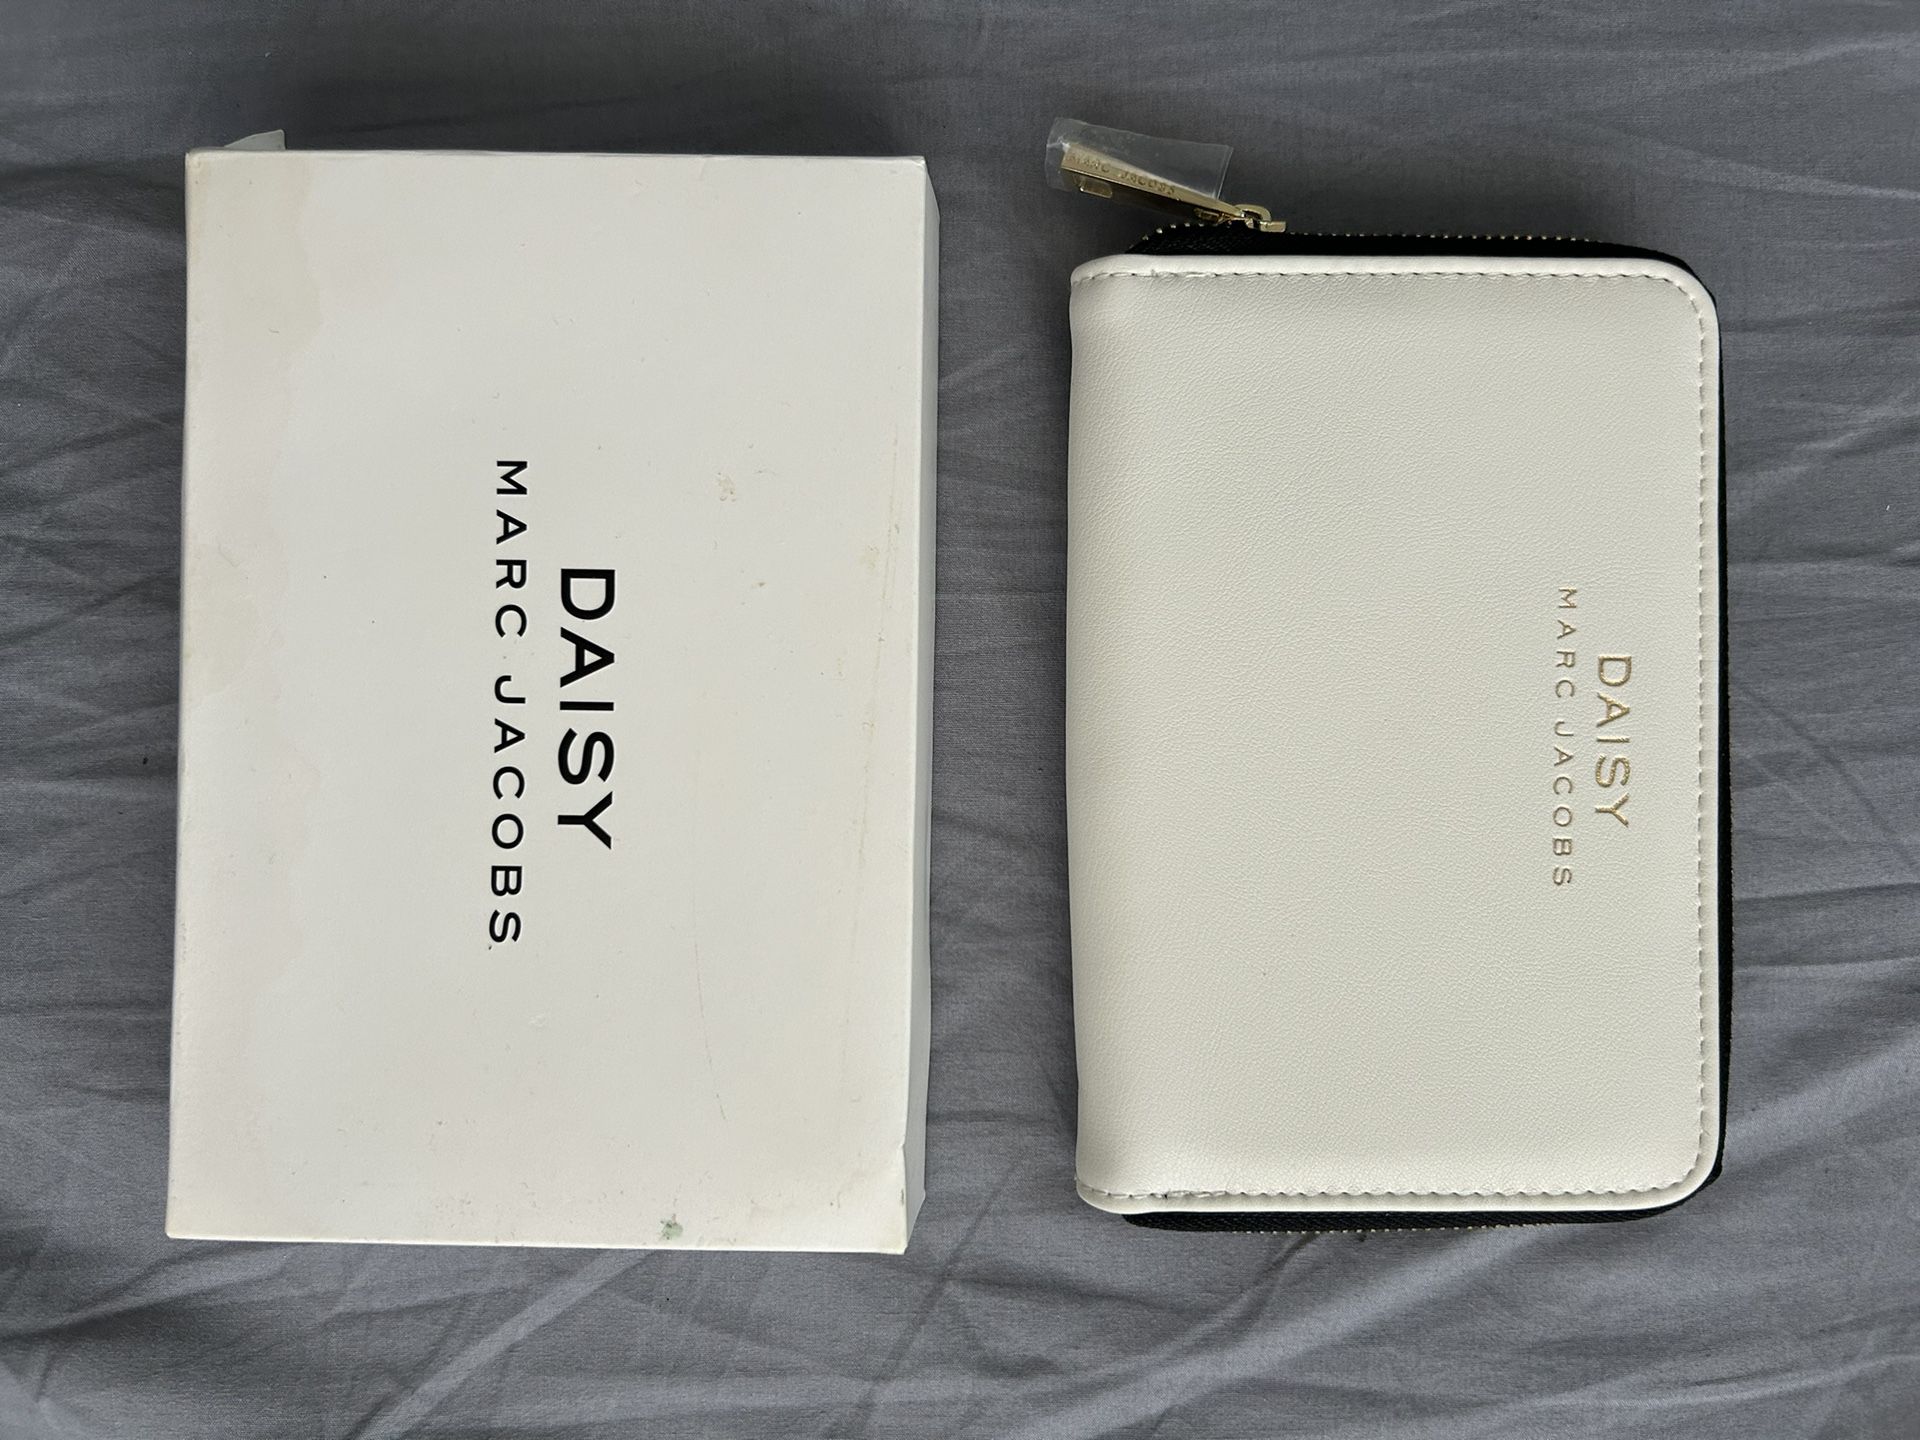 Marc Jacobs’s Wallet